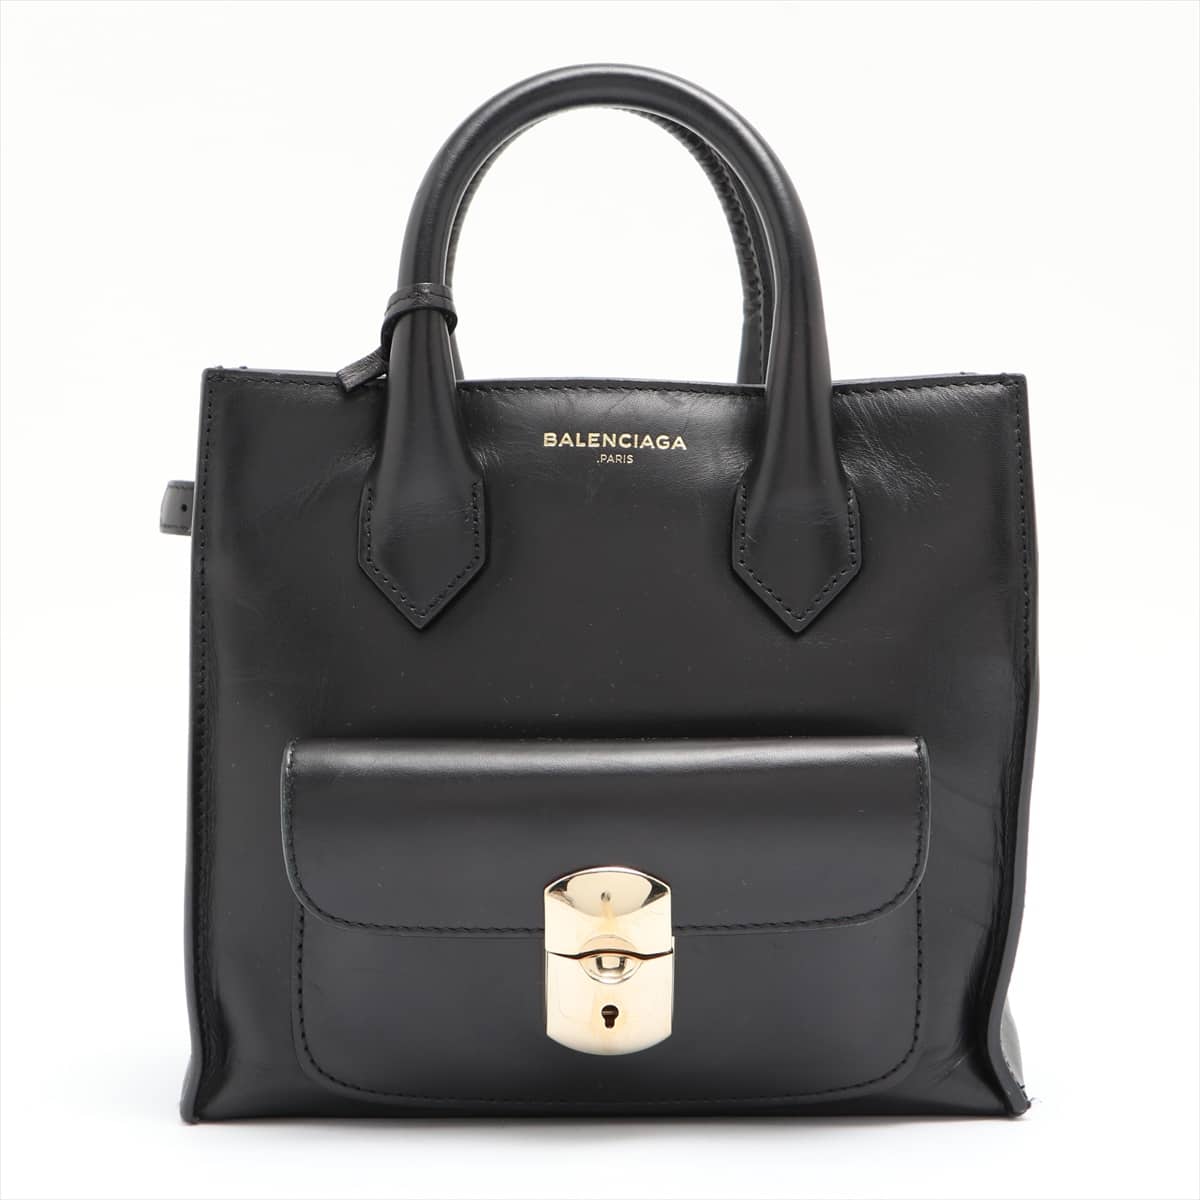 Balenciaga Padlock All Afternoon Leather 2way handbag Black 319499 2 straps, with mirror